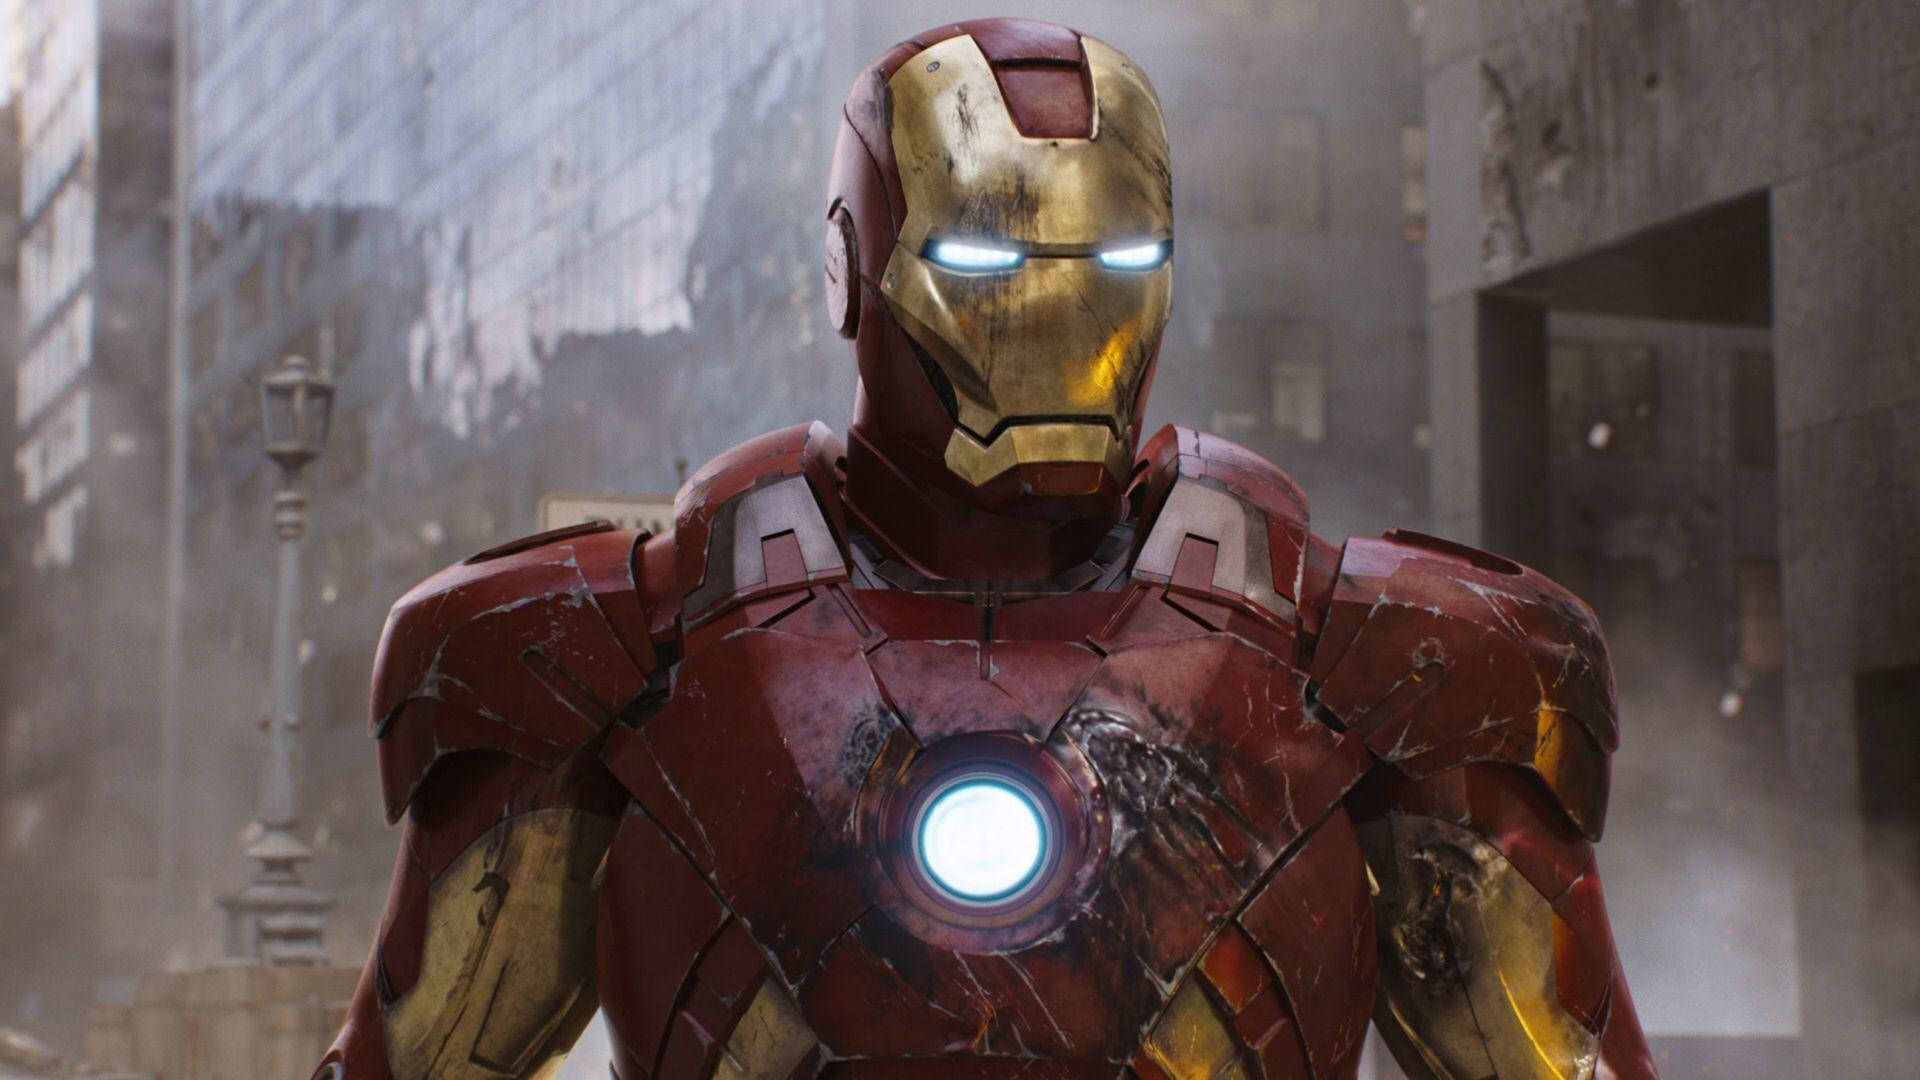 Tonystark Fliegt In Seinem Iron Man Mark 3 Anzug. Wallpaper